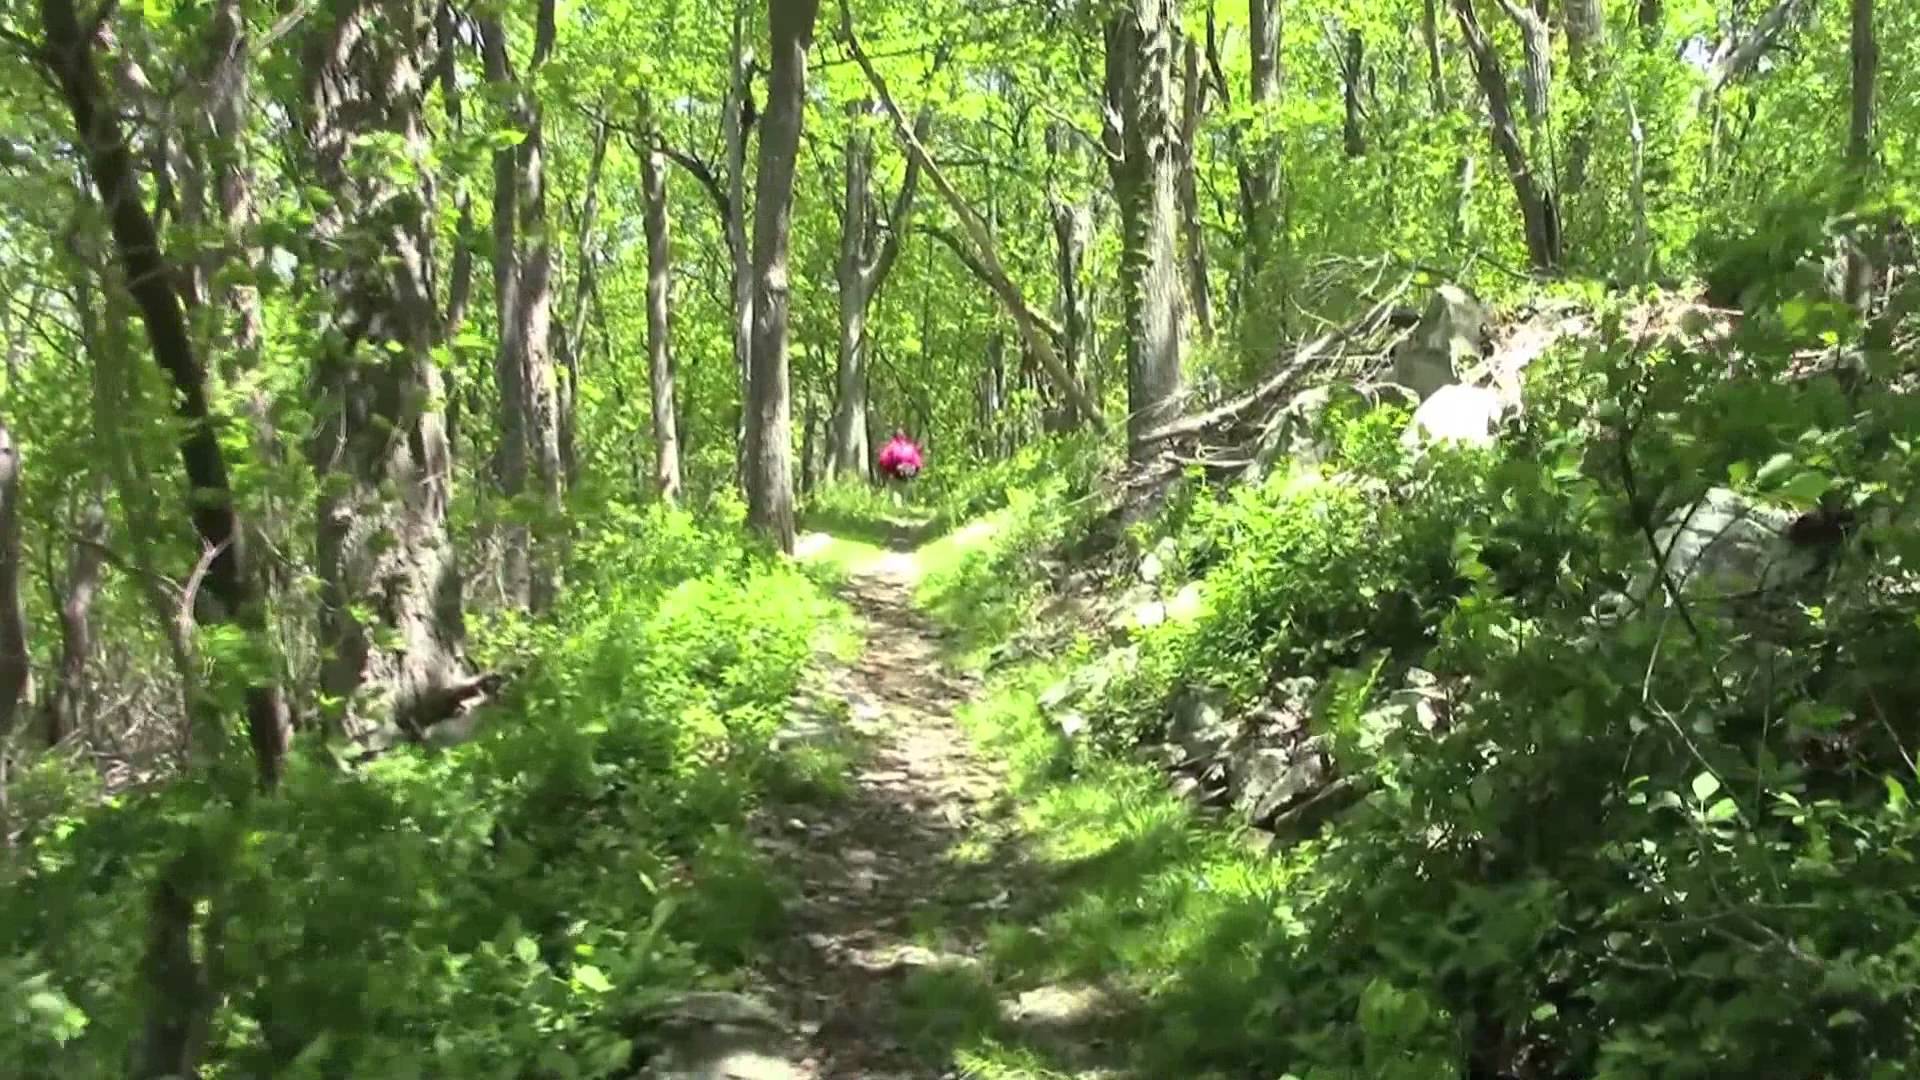 Hiking the Appalachian Trail within Shenandoah National Park